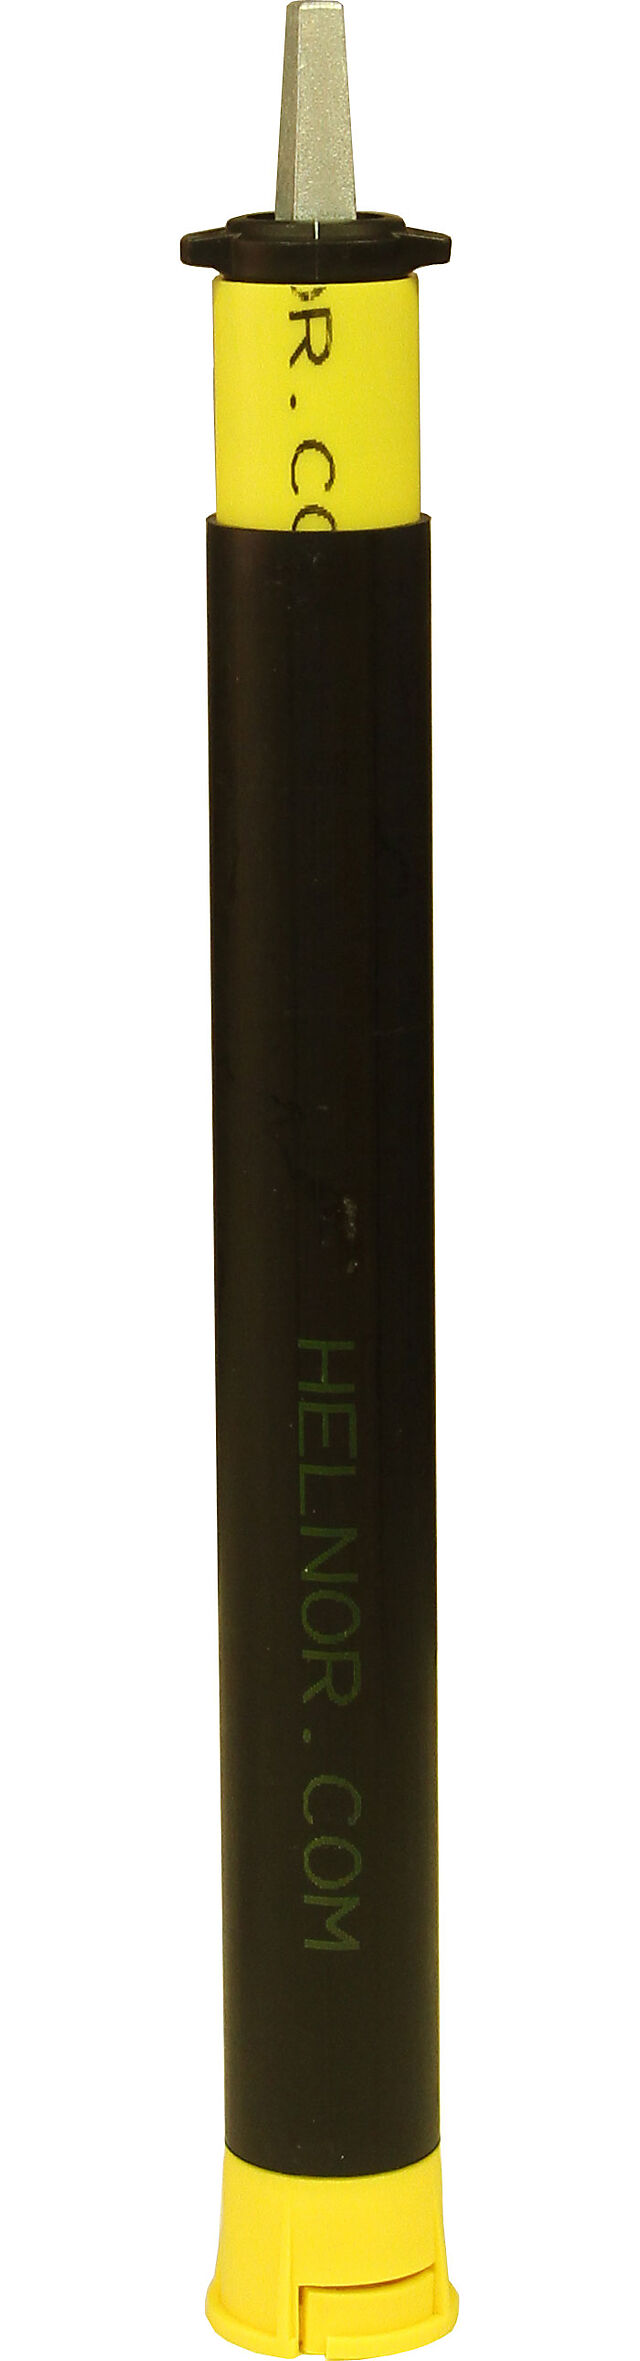 Spindelforlenger 90 - 149 cm XS1 Helnor 1